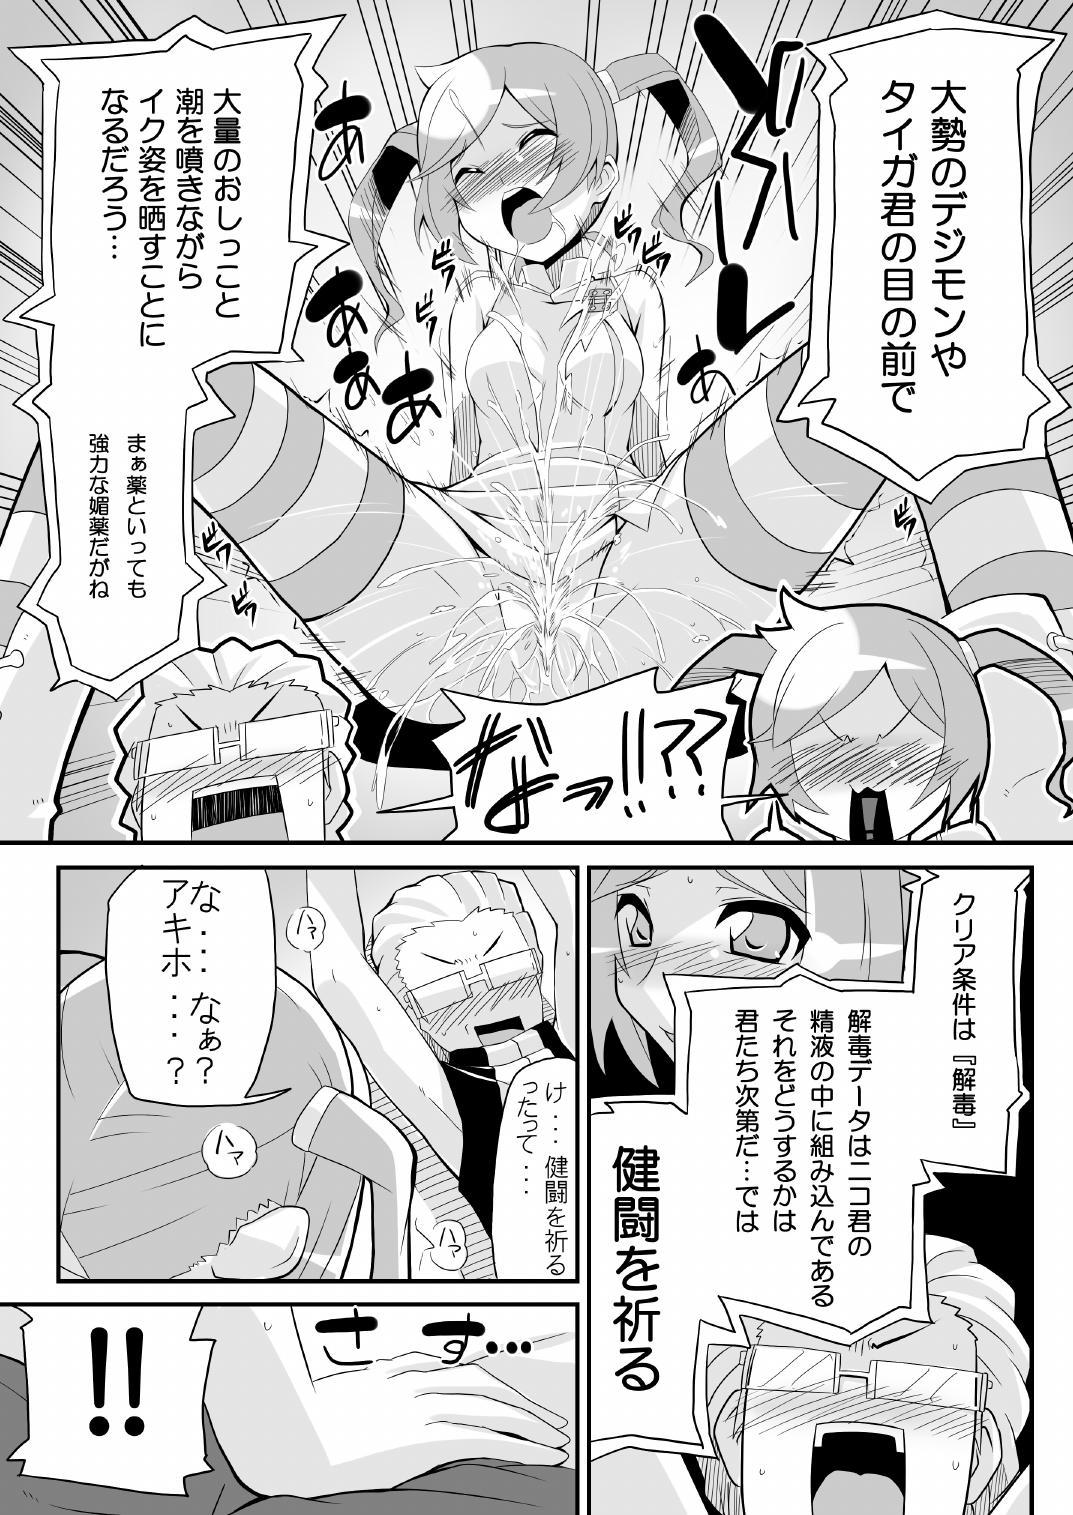 Butthole Re:Akiho/Rinatize Ero - Digimon Parody - Page 5